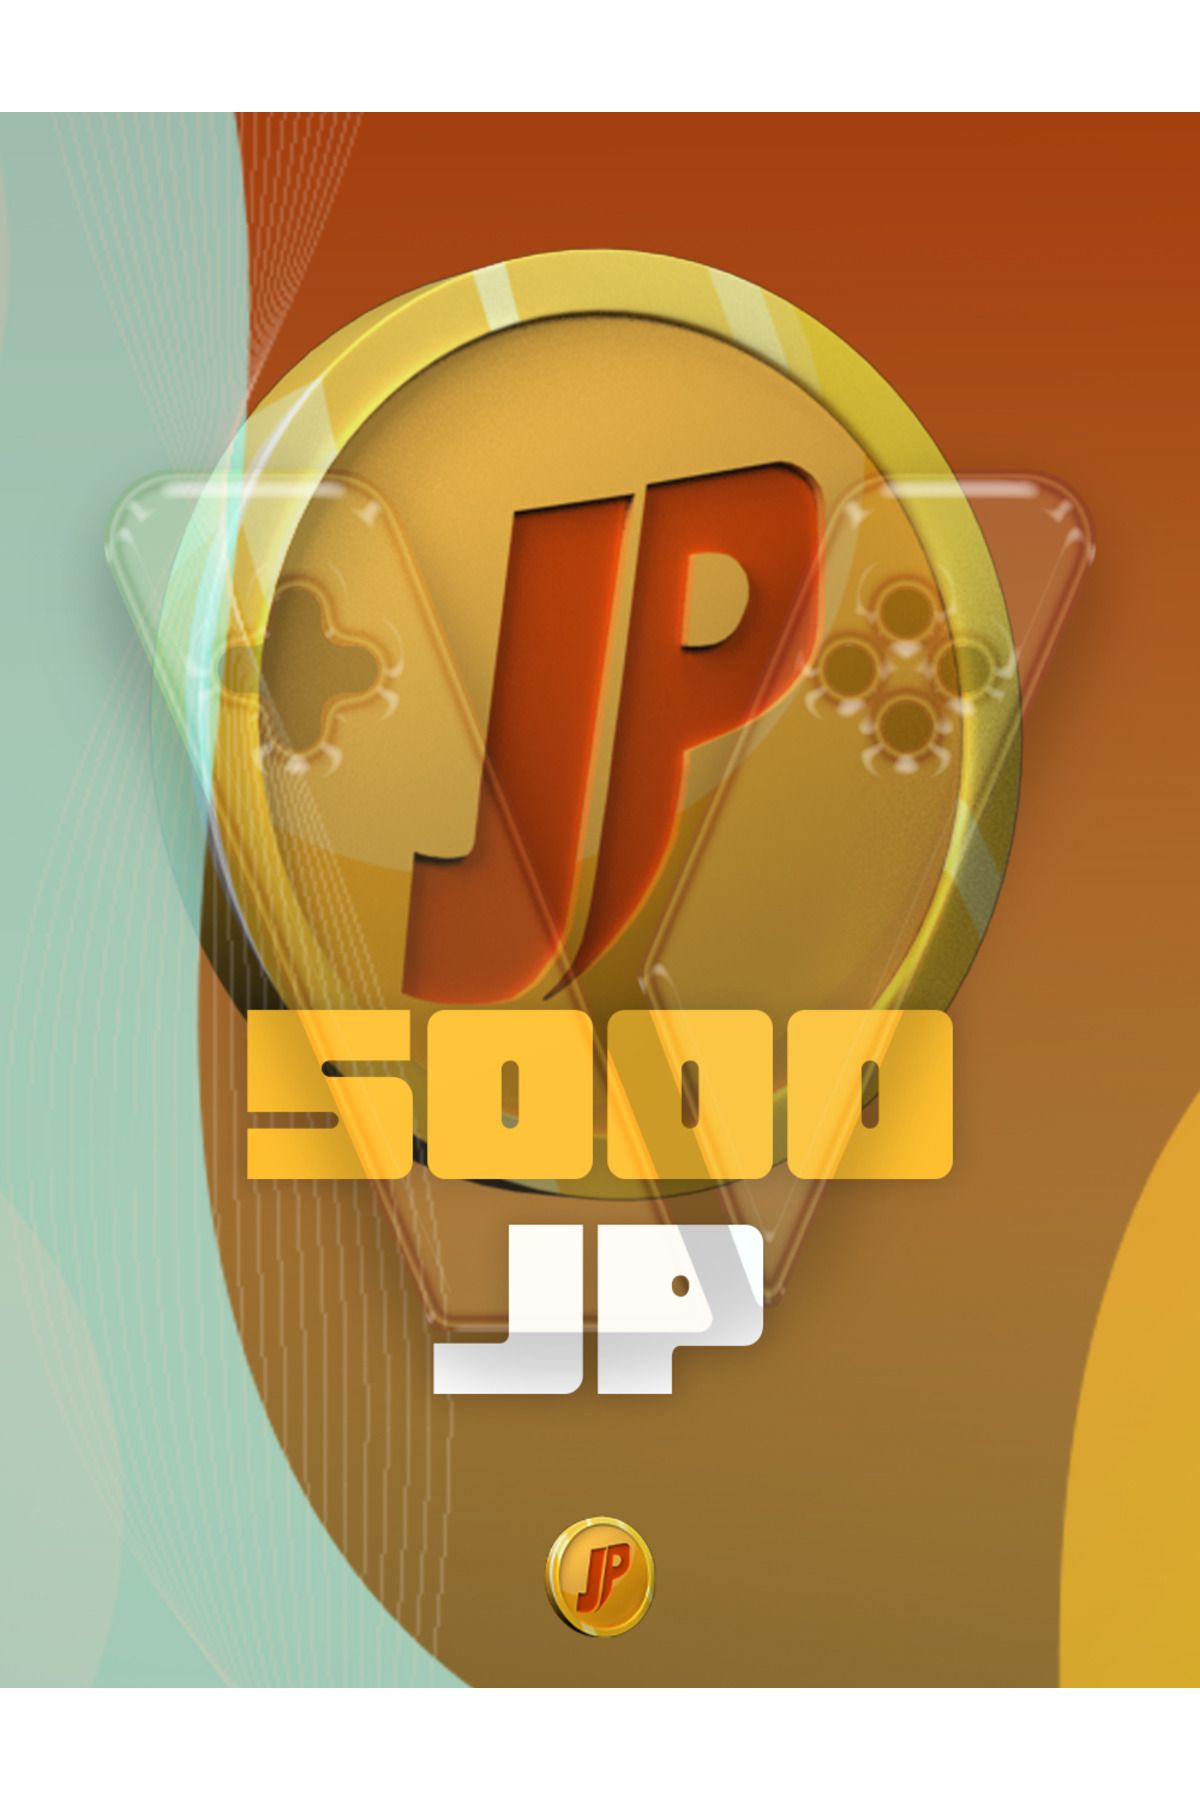 Joygame 5000jp Joypara